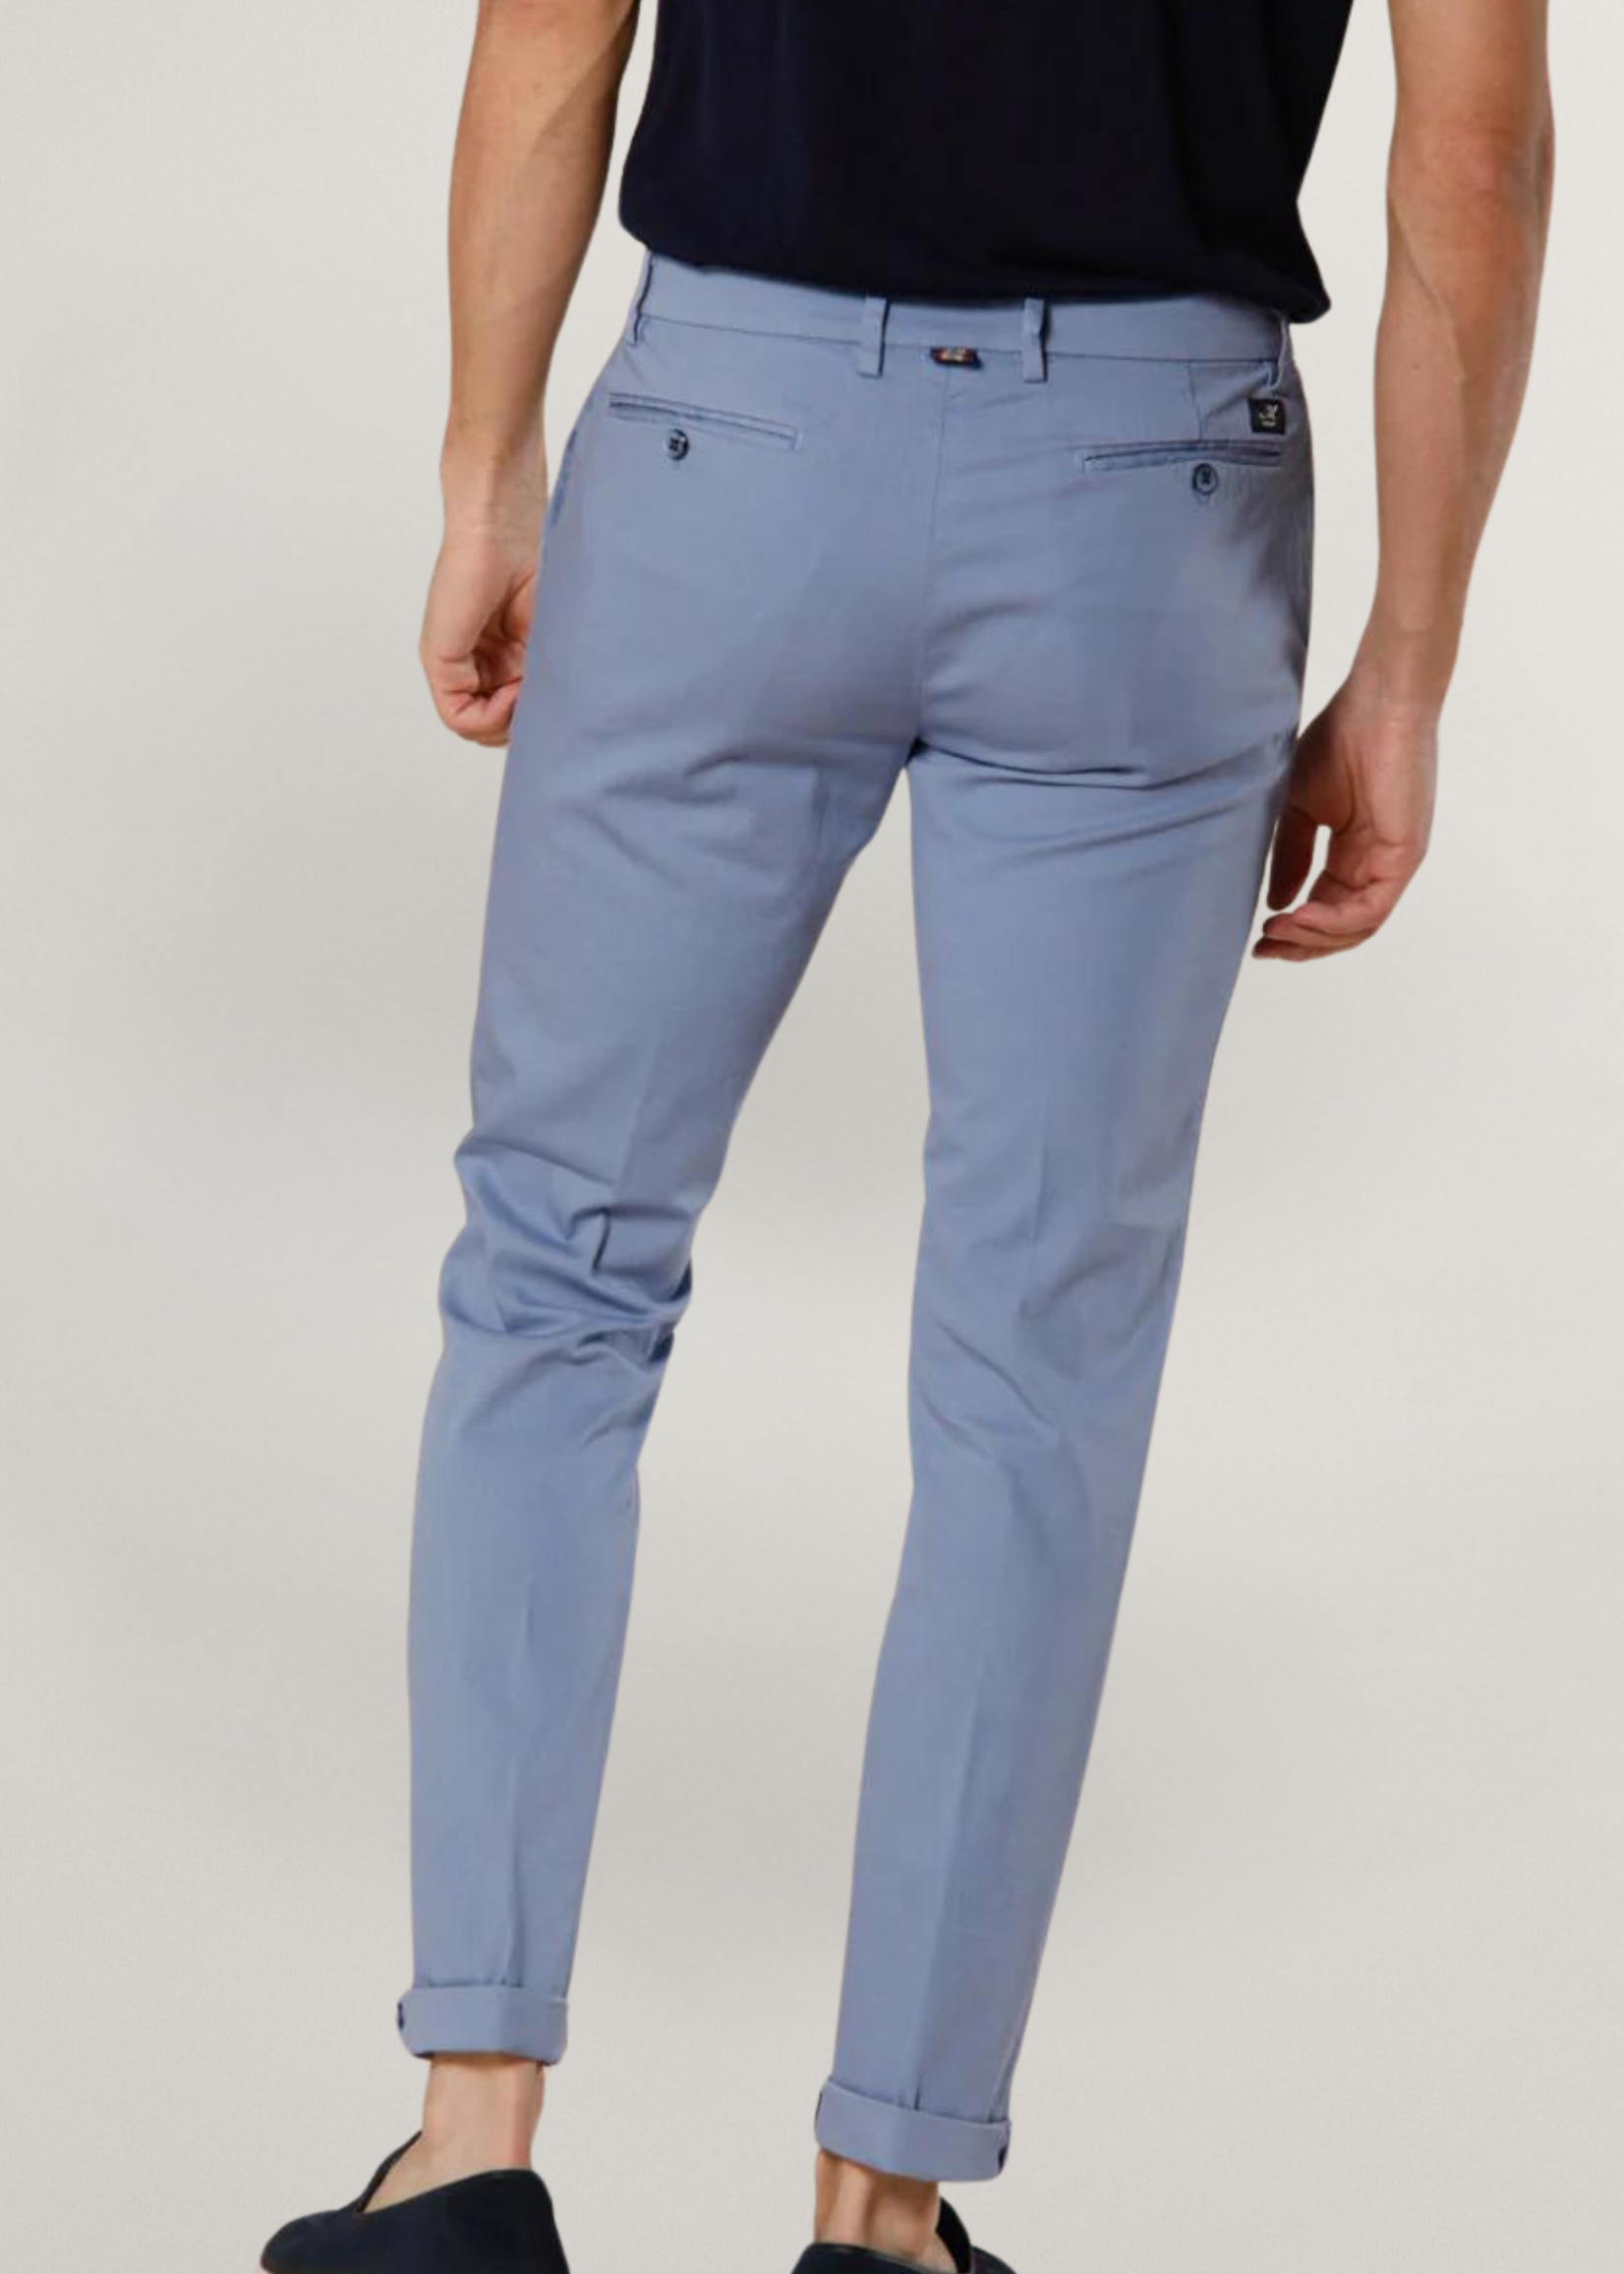 MASON'S Torino Style Pantalon chino homme en satin stretch Slim fit - Azur